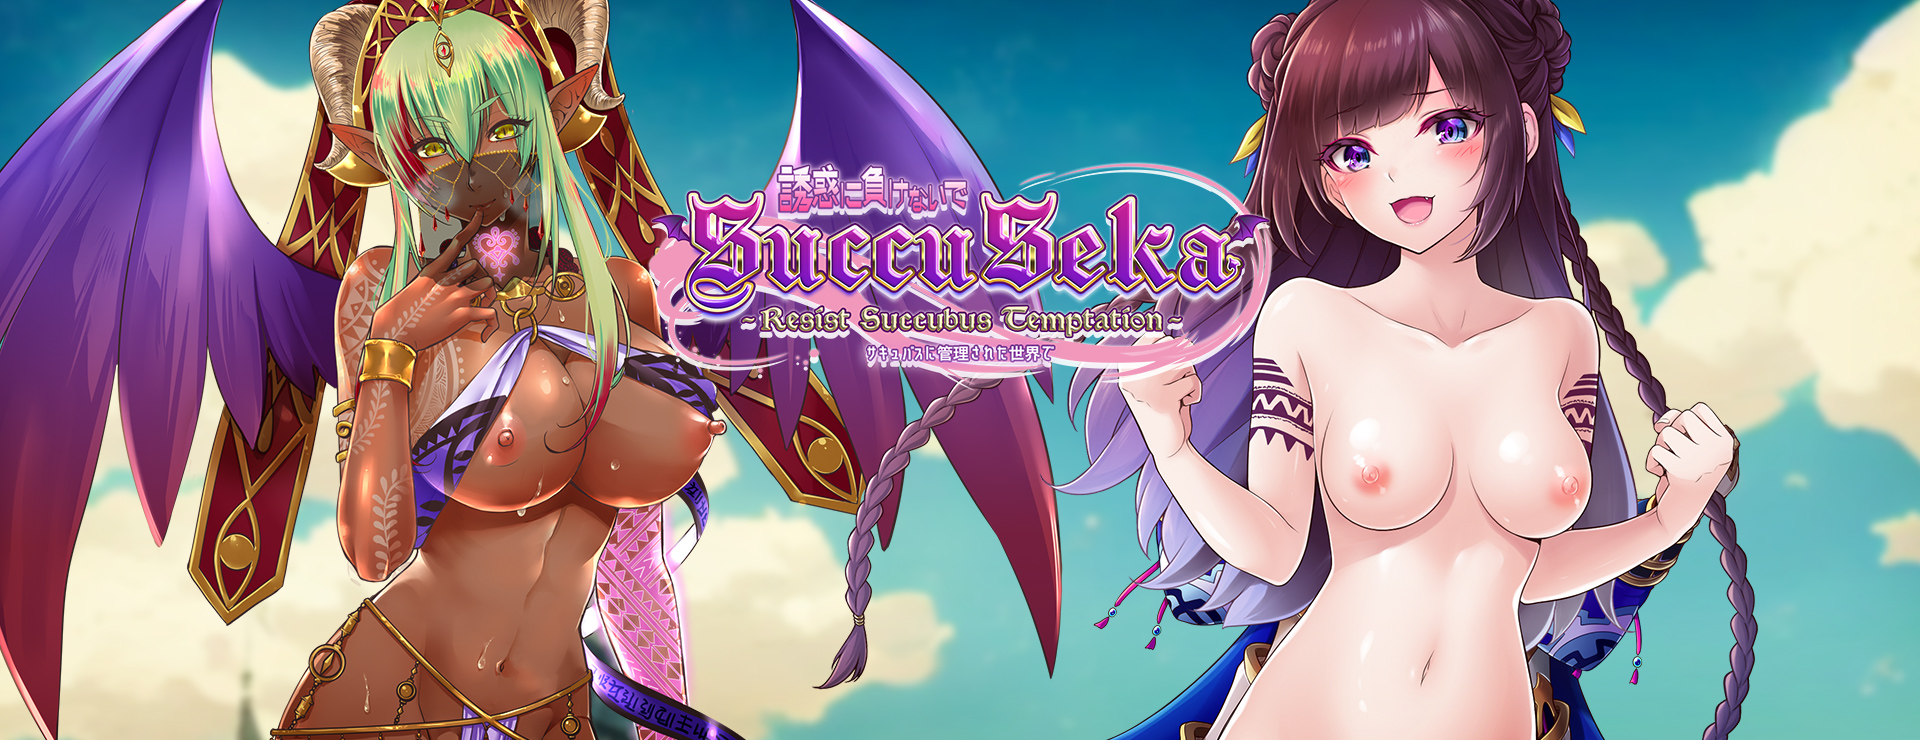 SuccuSeka: Resist Succubus Temptation Global Version - 虚拟小说 遊戲